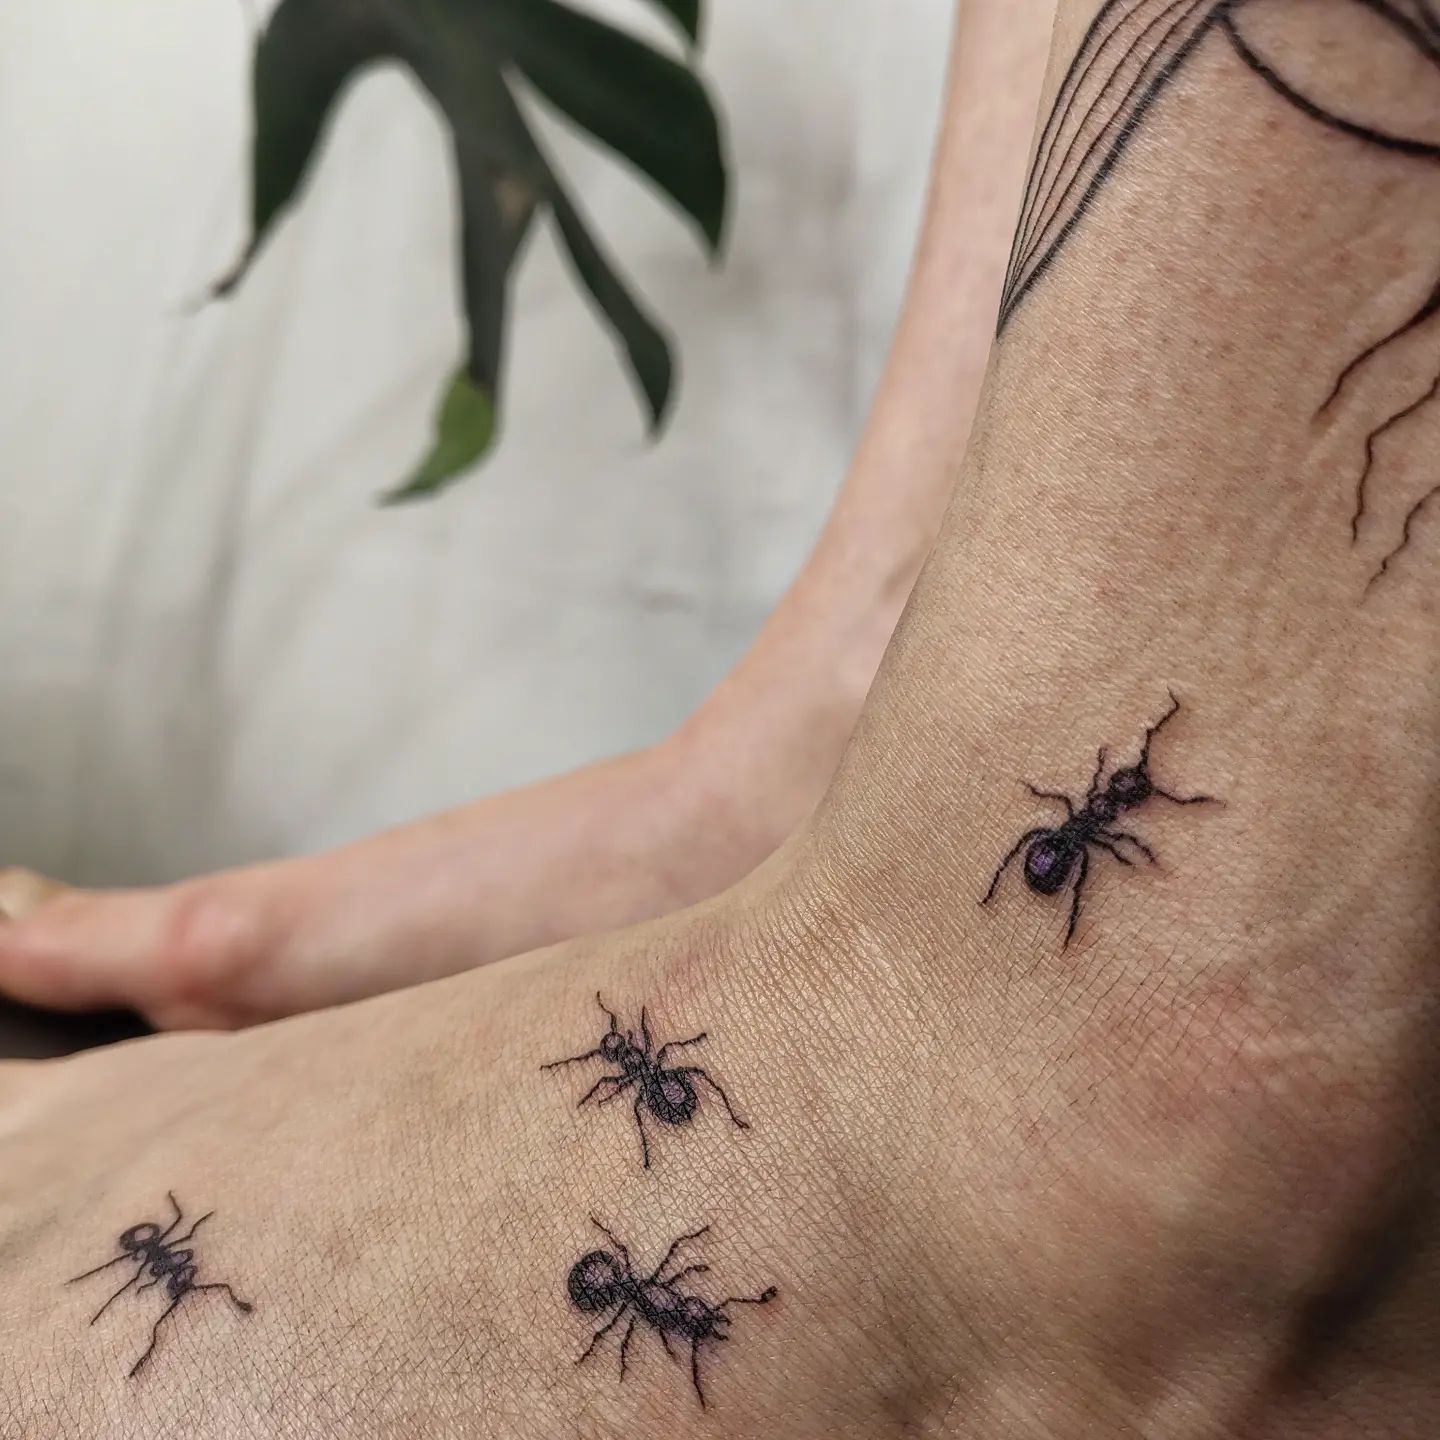 Ant tattoo ideas for men by rhea blu.mi